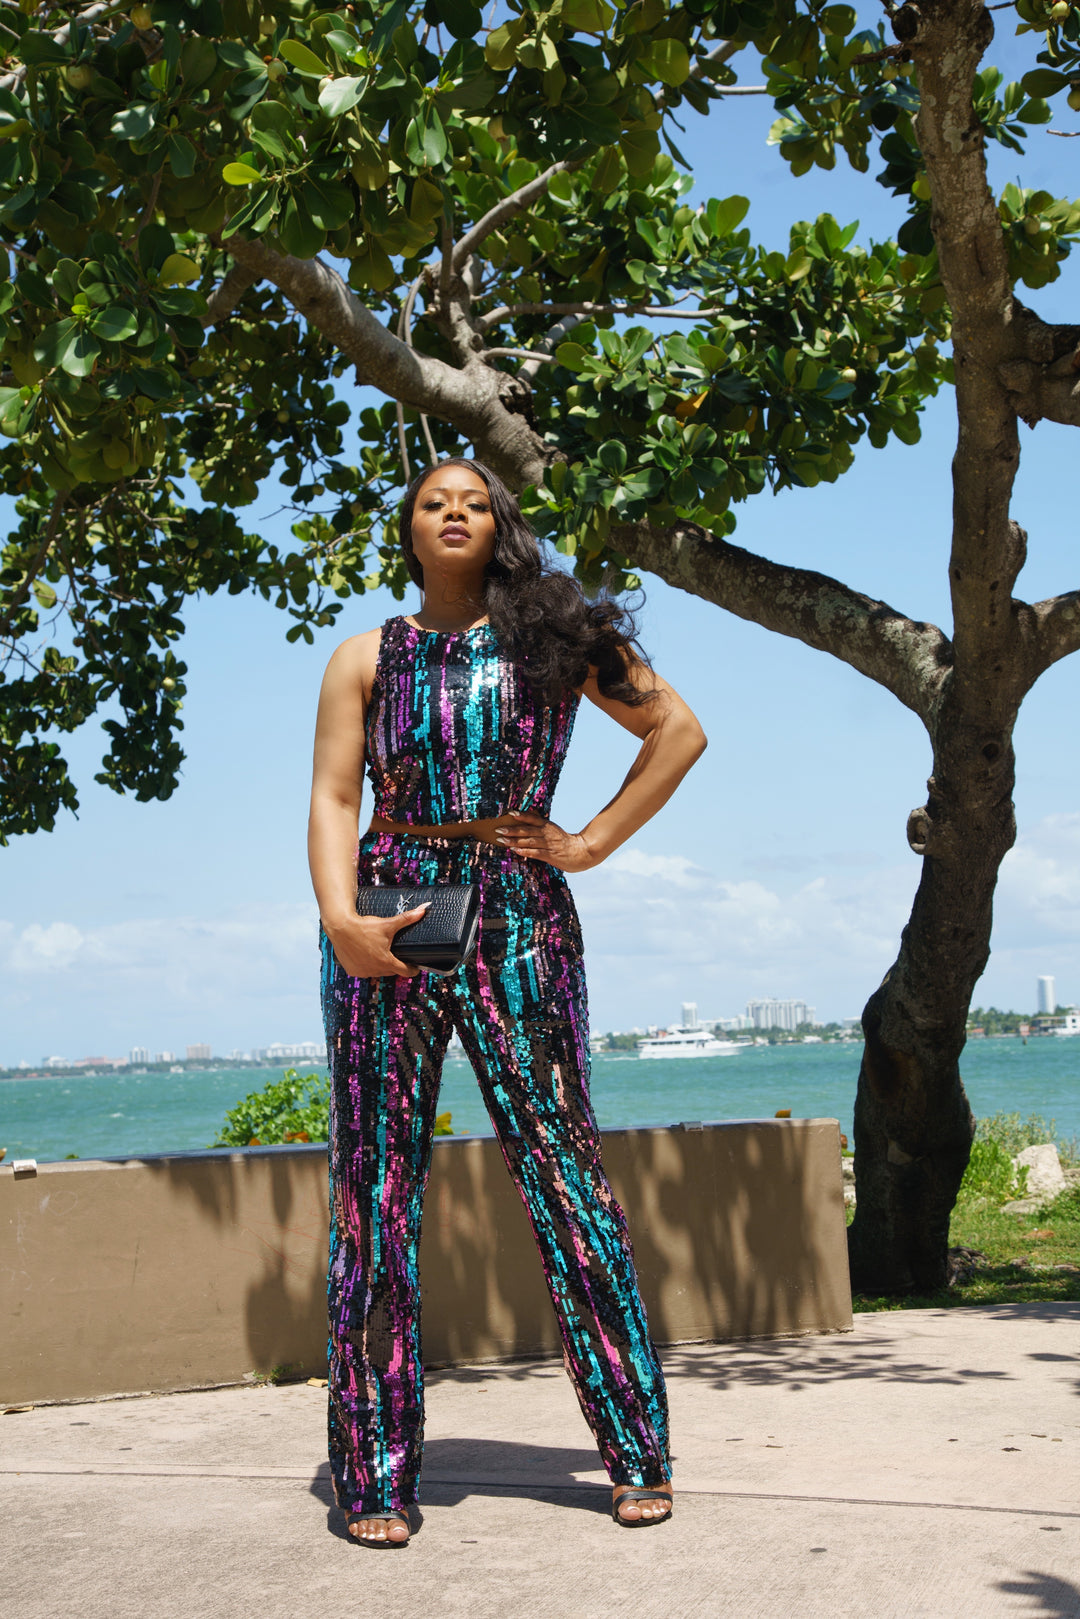 Keylows Miami Vice Multicolor Sequin Crop Top and Pants Set